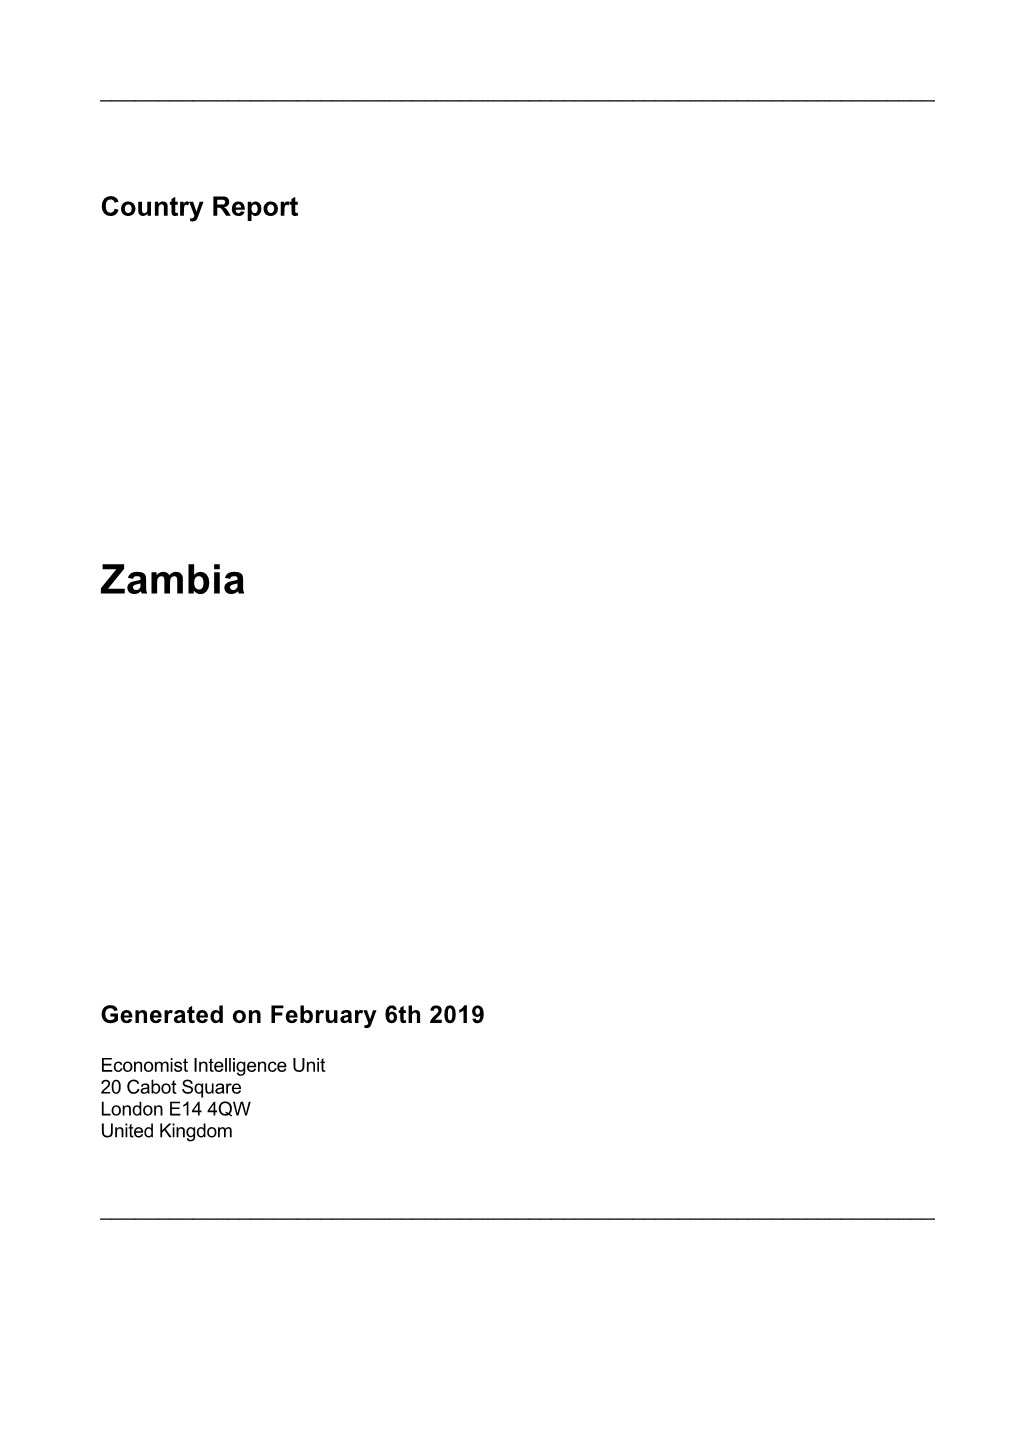 Country Report Zambia January 2019